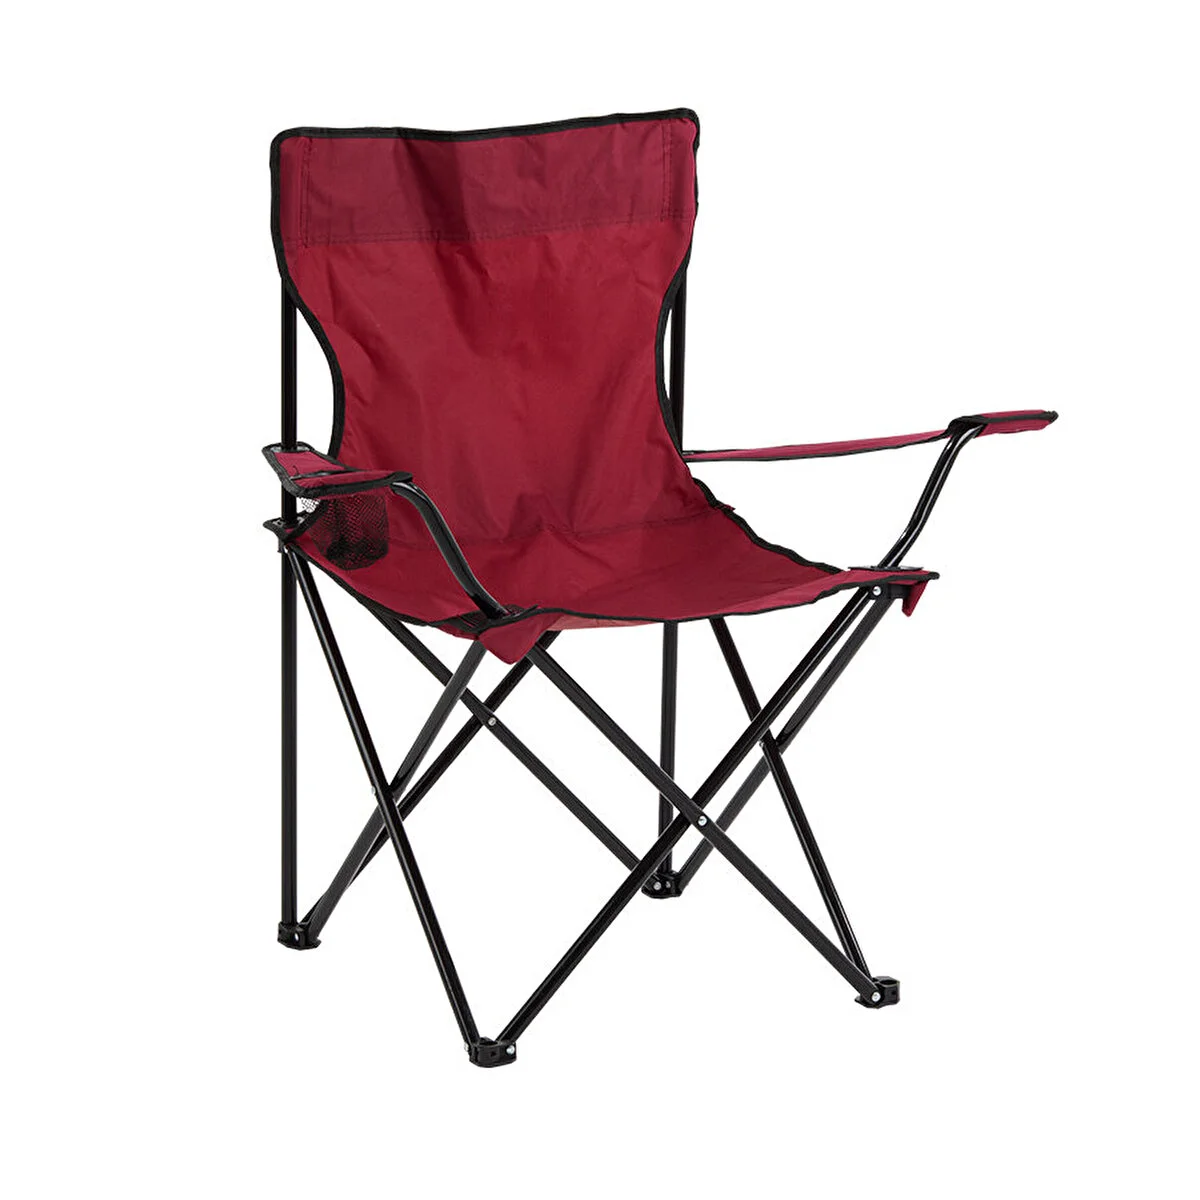 Peralite - Basic Metal İskelet Katlanabilir Kamp Sandalyesi Bordo